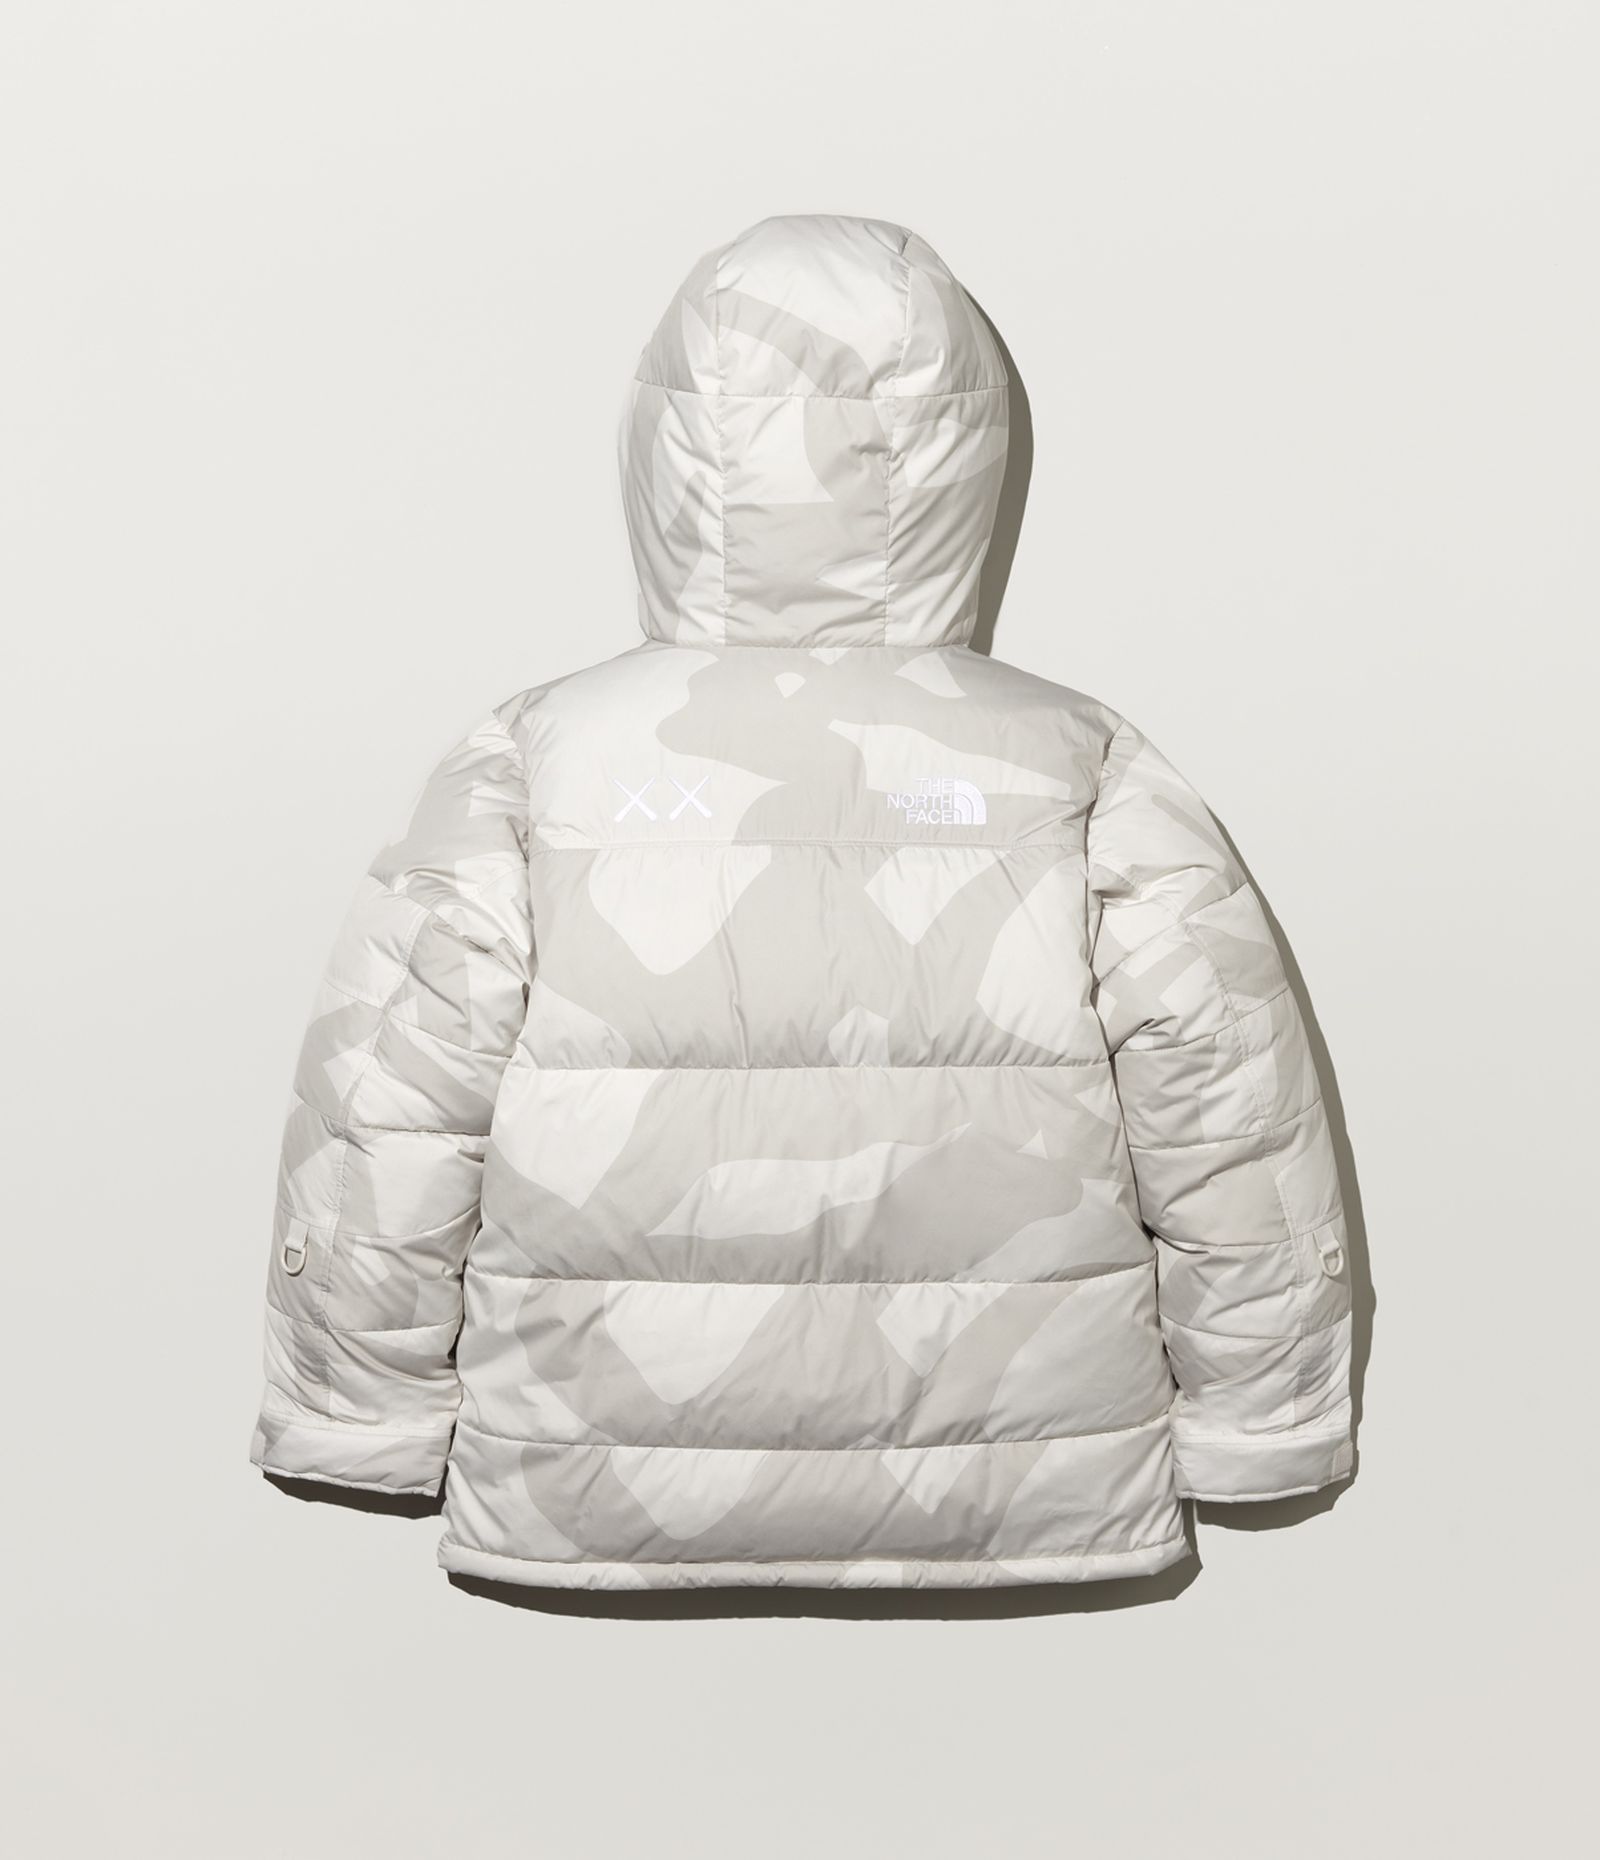 KAWS' Second North Face Collab Drops Beautiful Minimalist Jackets